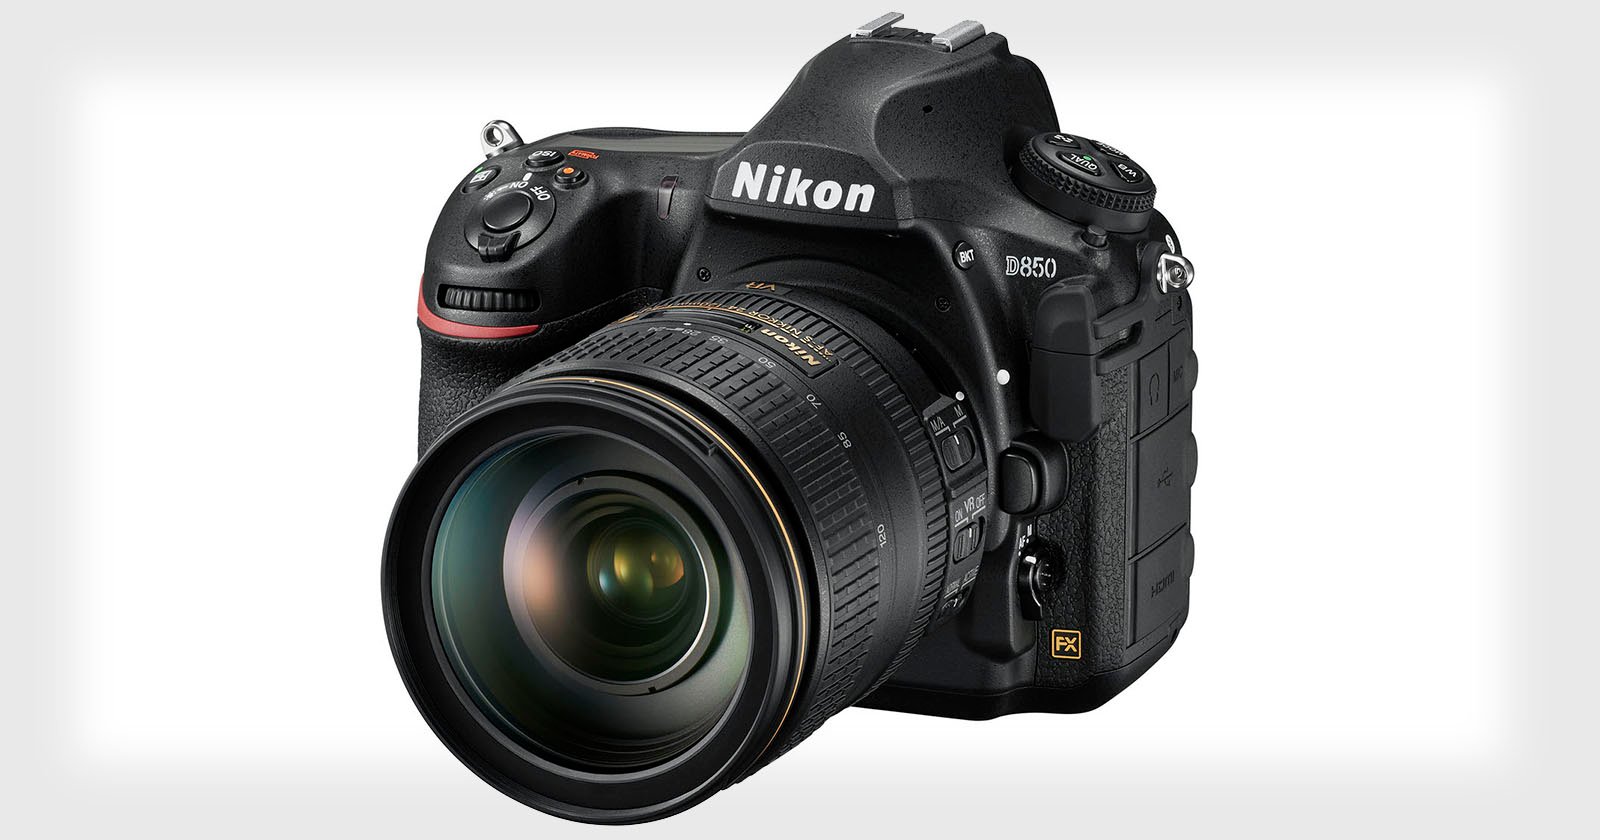 Nikon D850 Announced: First 45.7MP BSI Sensor, 4K Video, $3,300